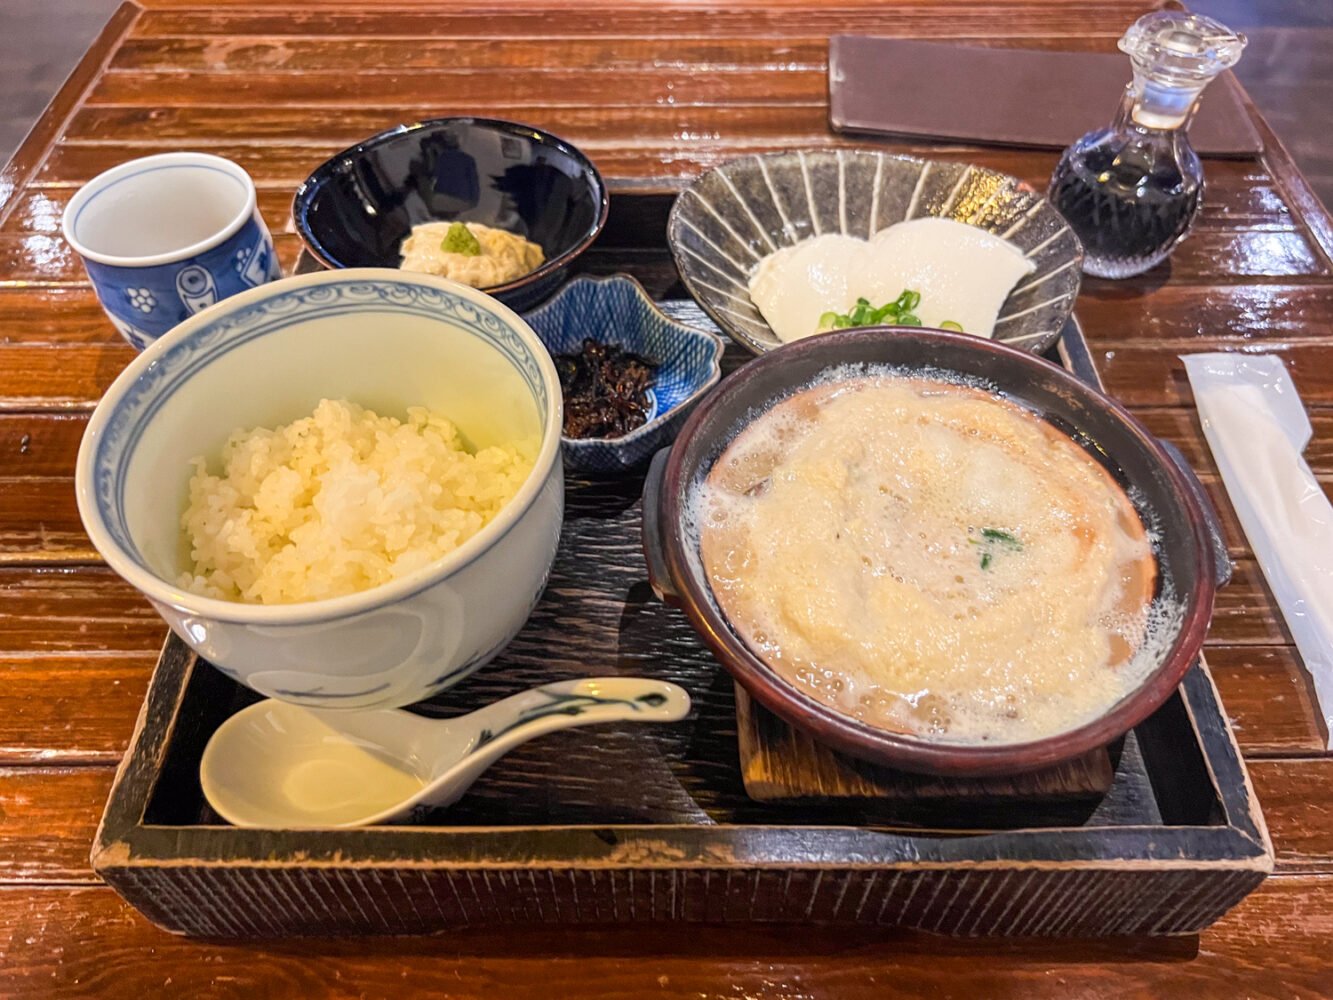 Yuba-don tofu skin egg soup platter with bowl of rice, soybean curd, and yuba tofu skin.